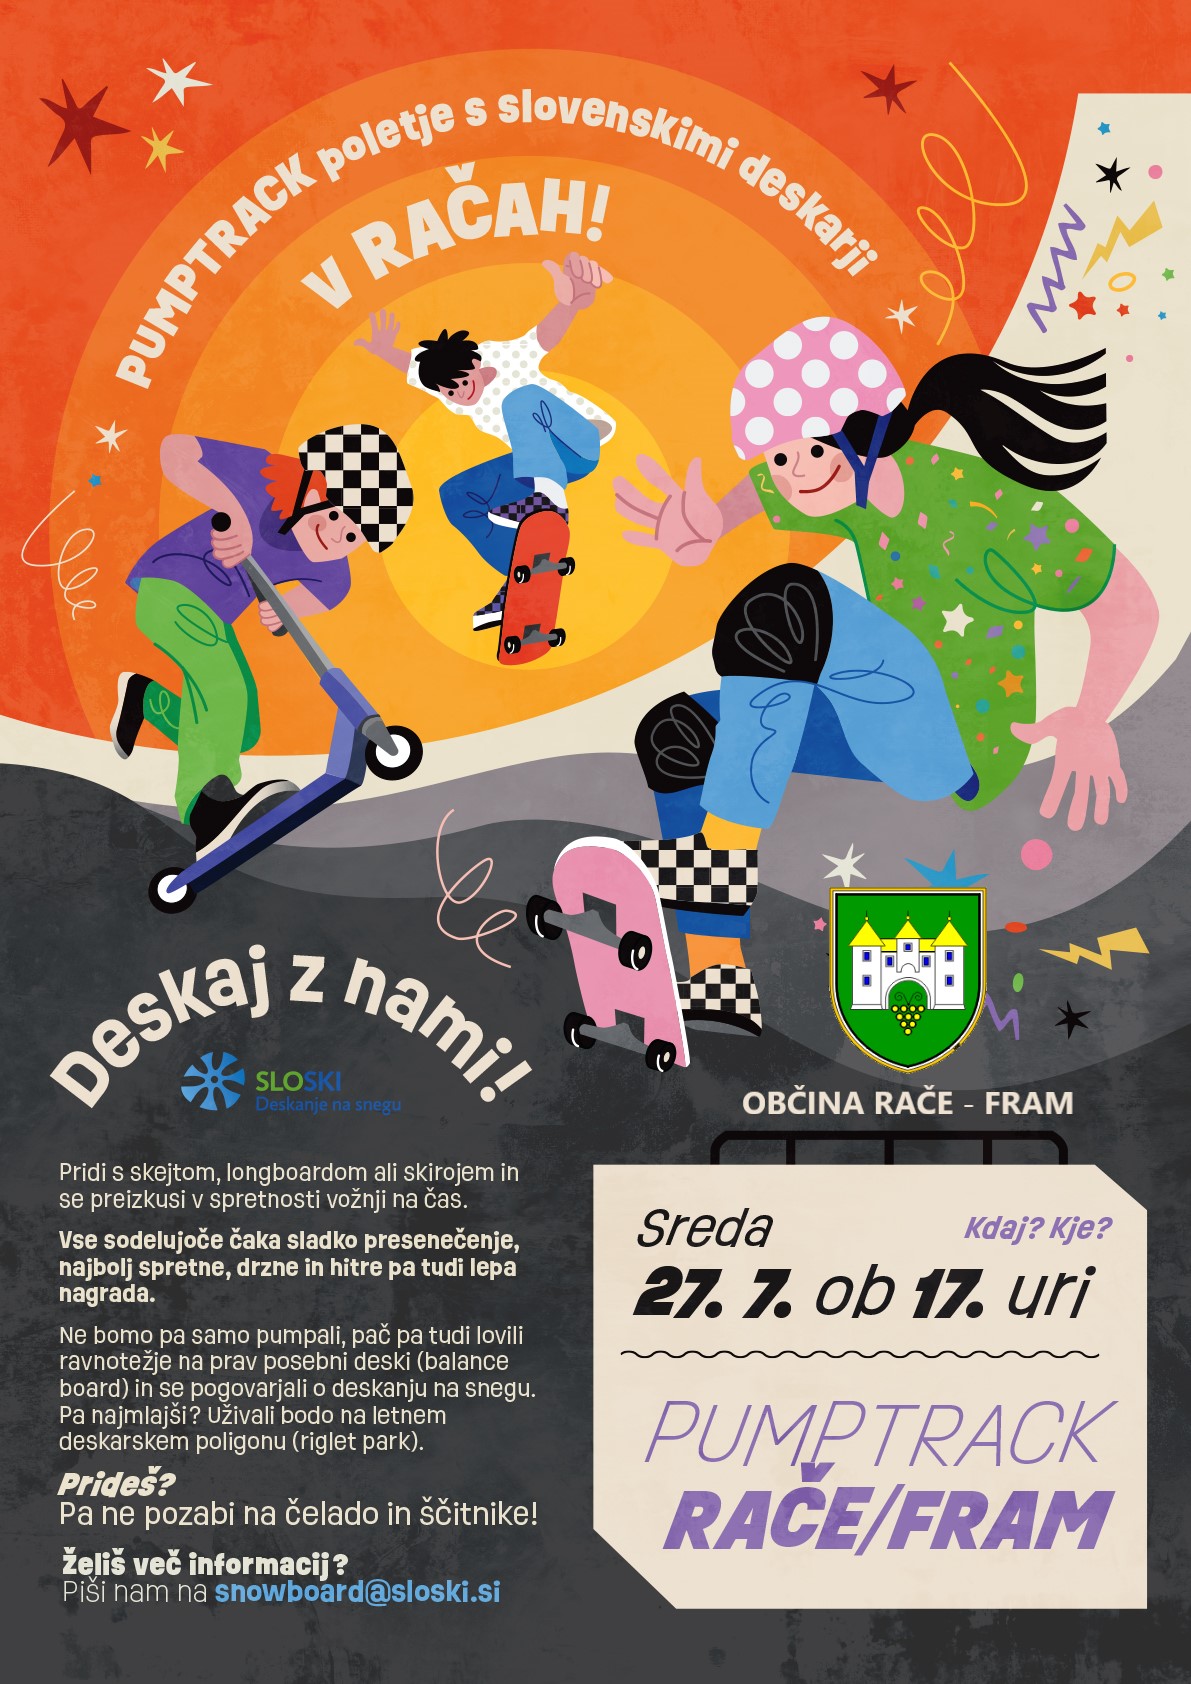 szs-deskaj-z-nami-plakat-race-fram-eventi-A2